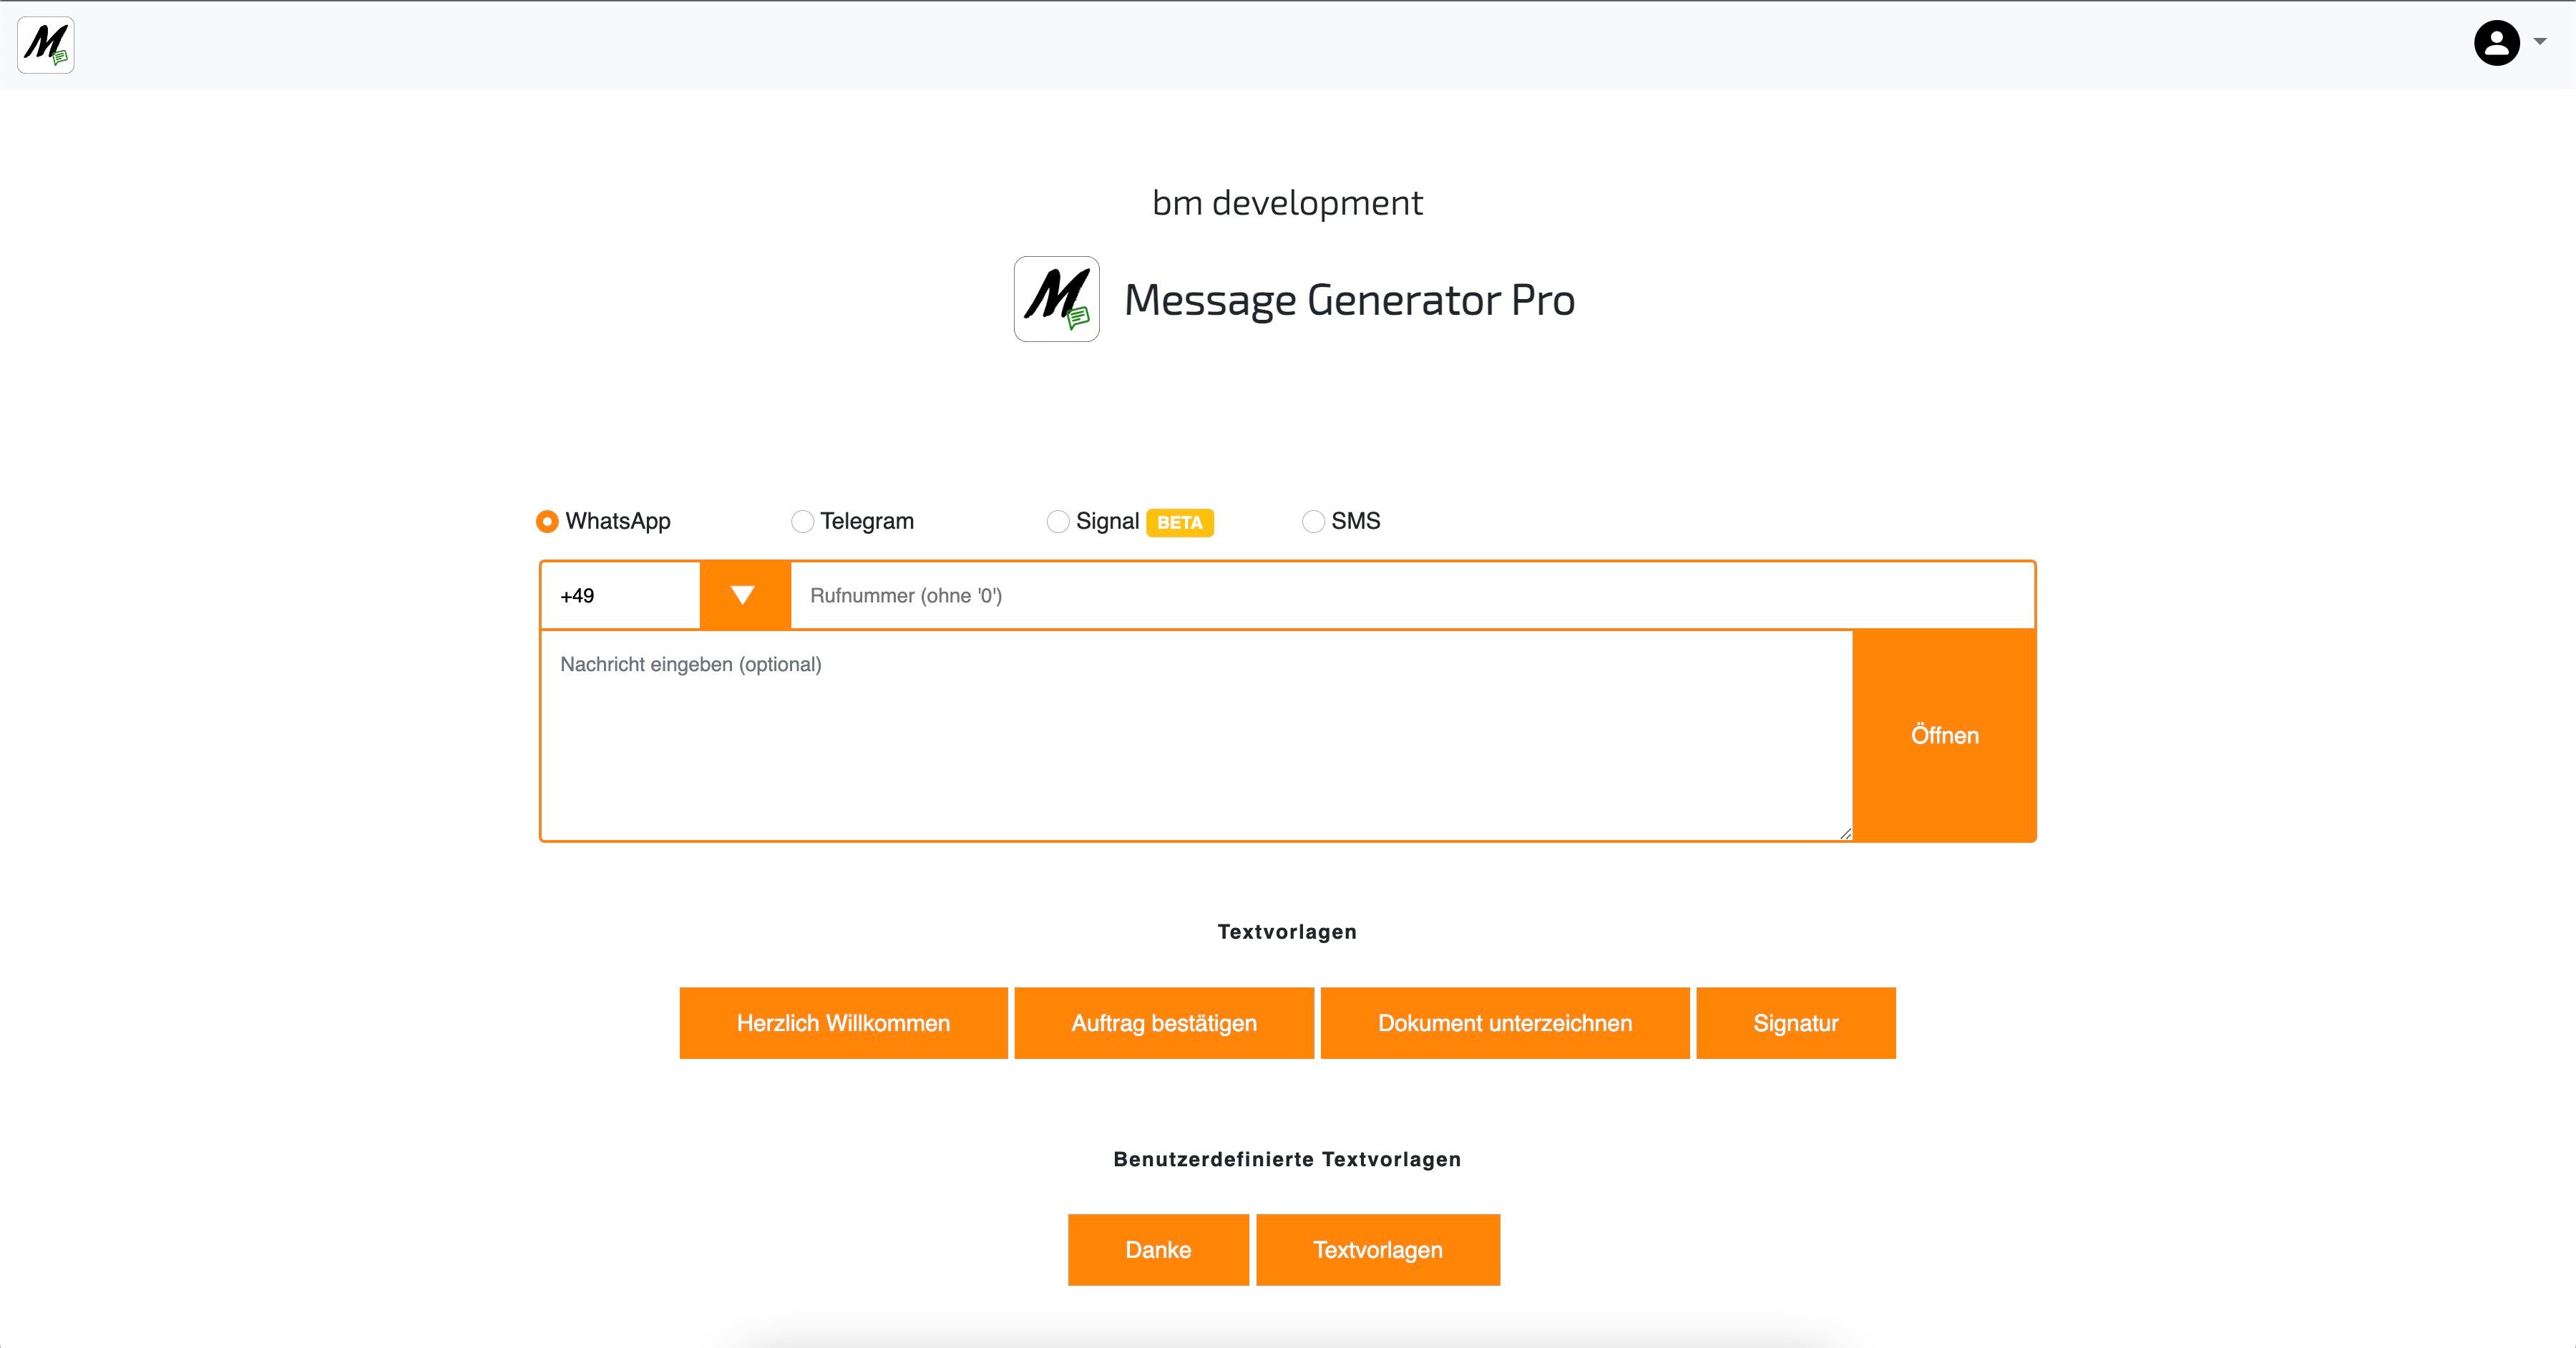 Message Generator Pro